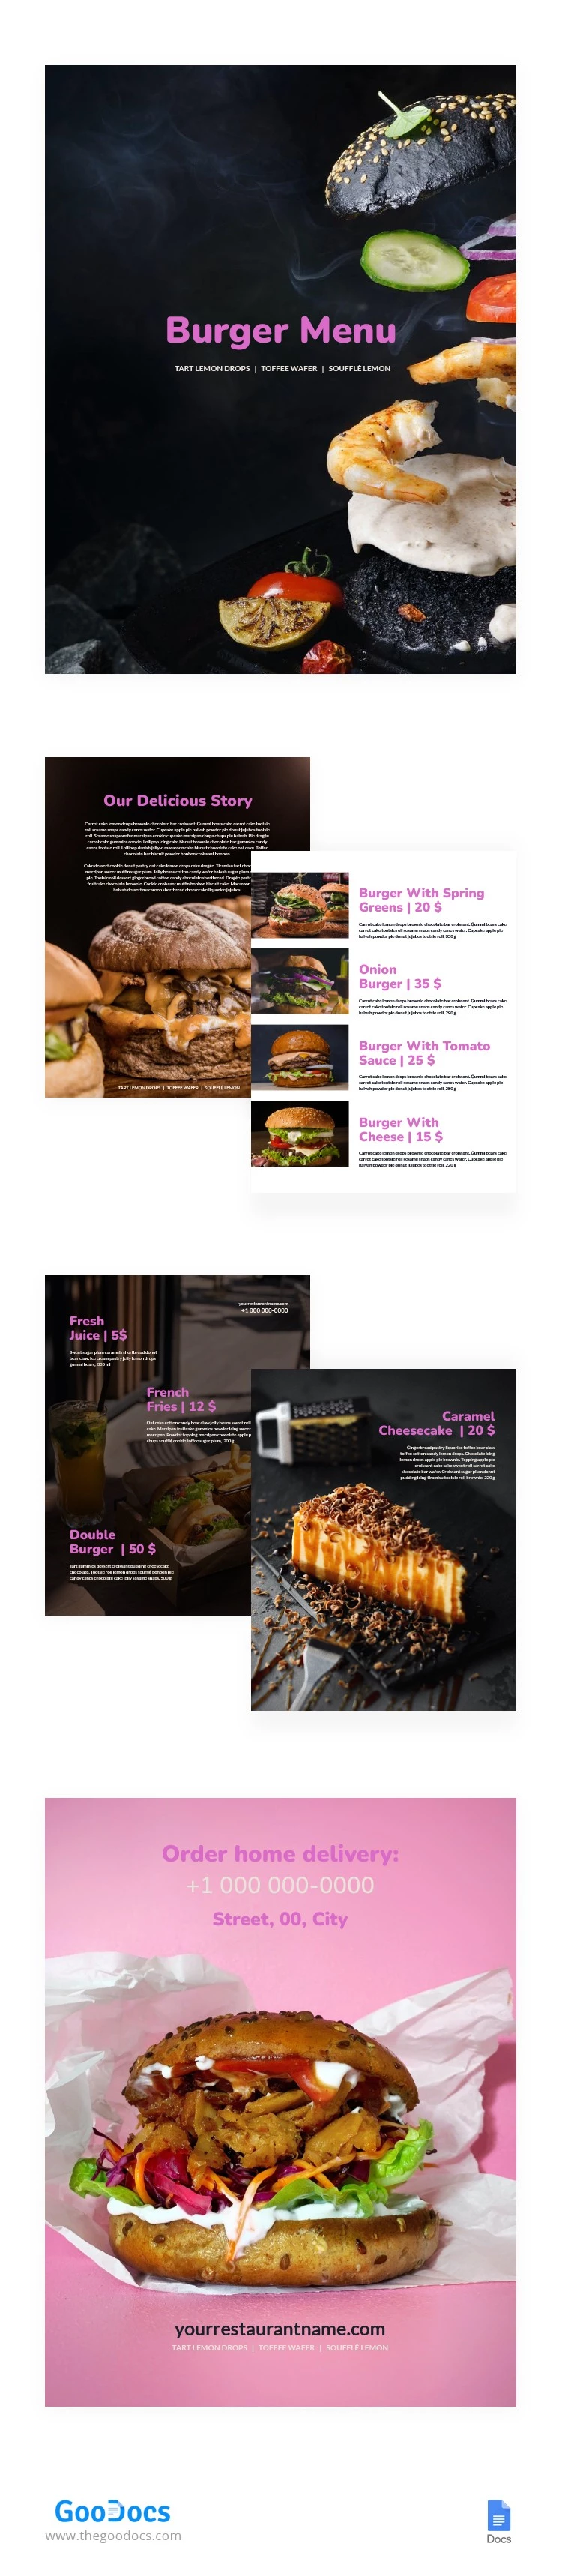 Menu Simples de Restaurante de Hambúrguer - free Google Docs Template - 10063786